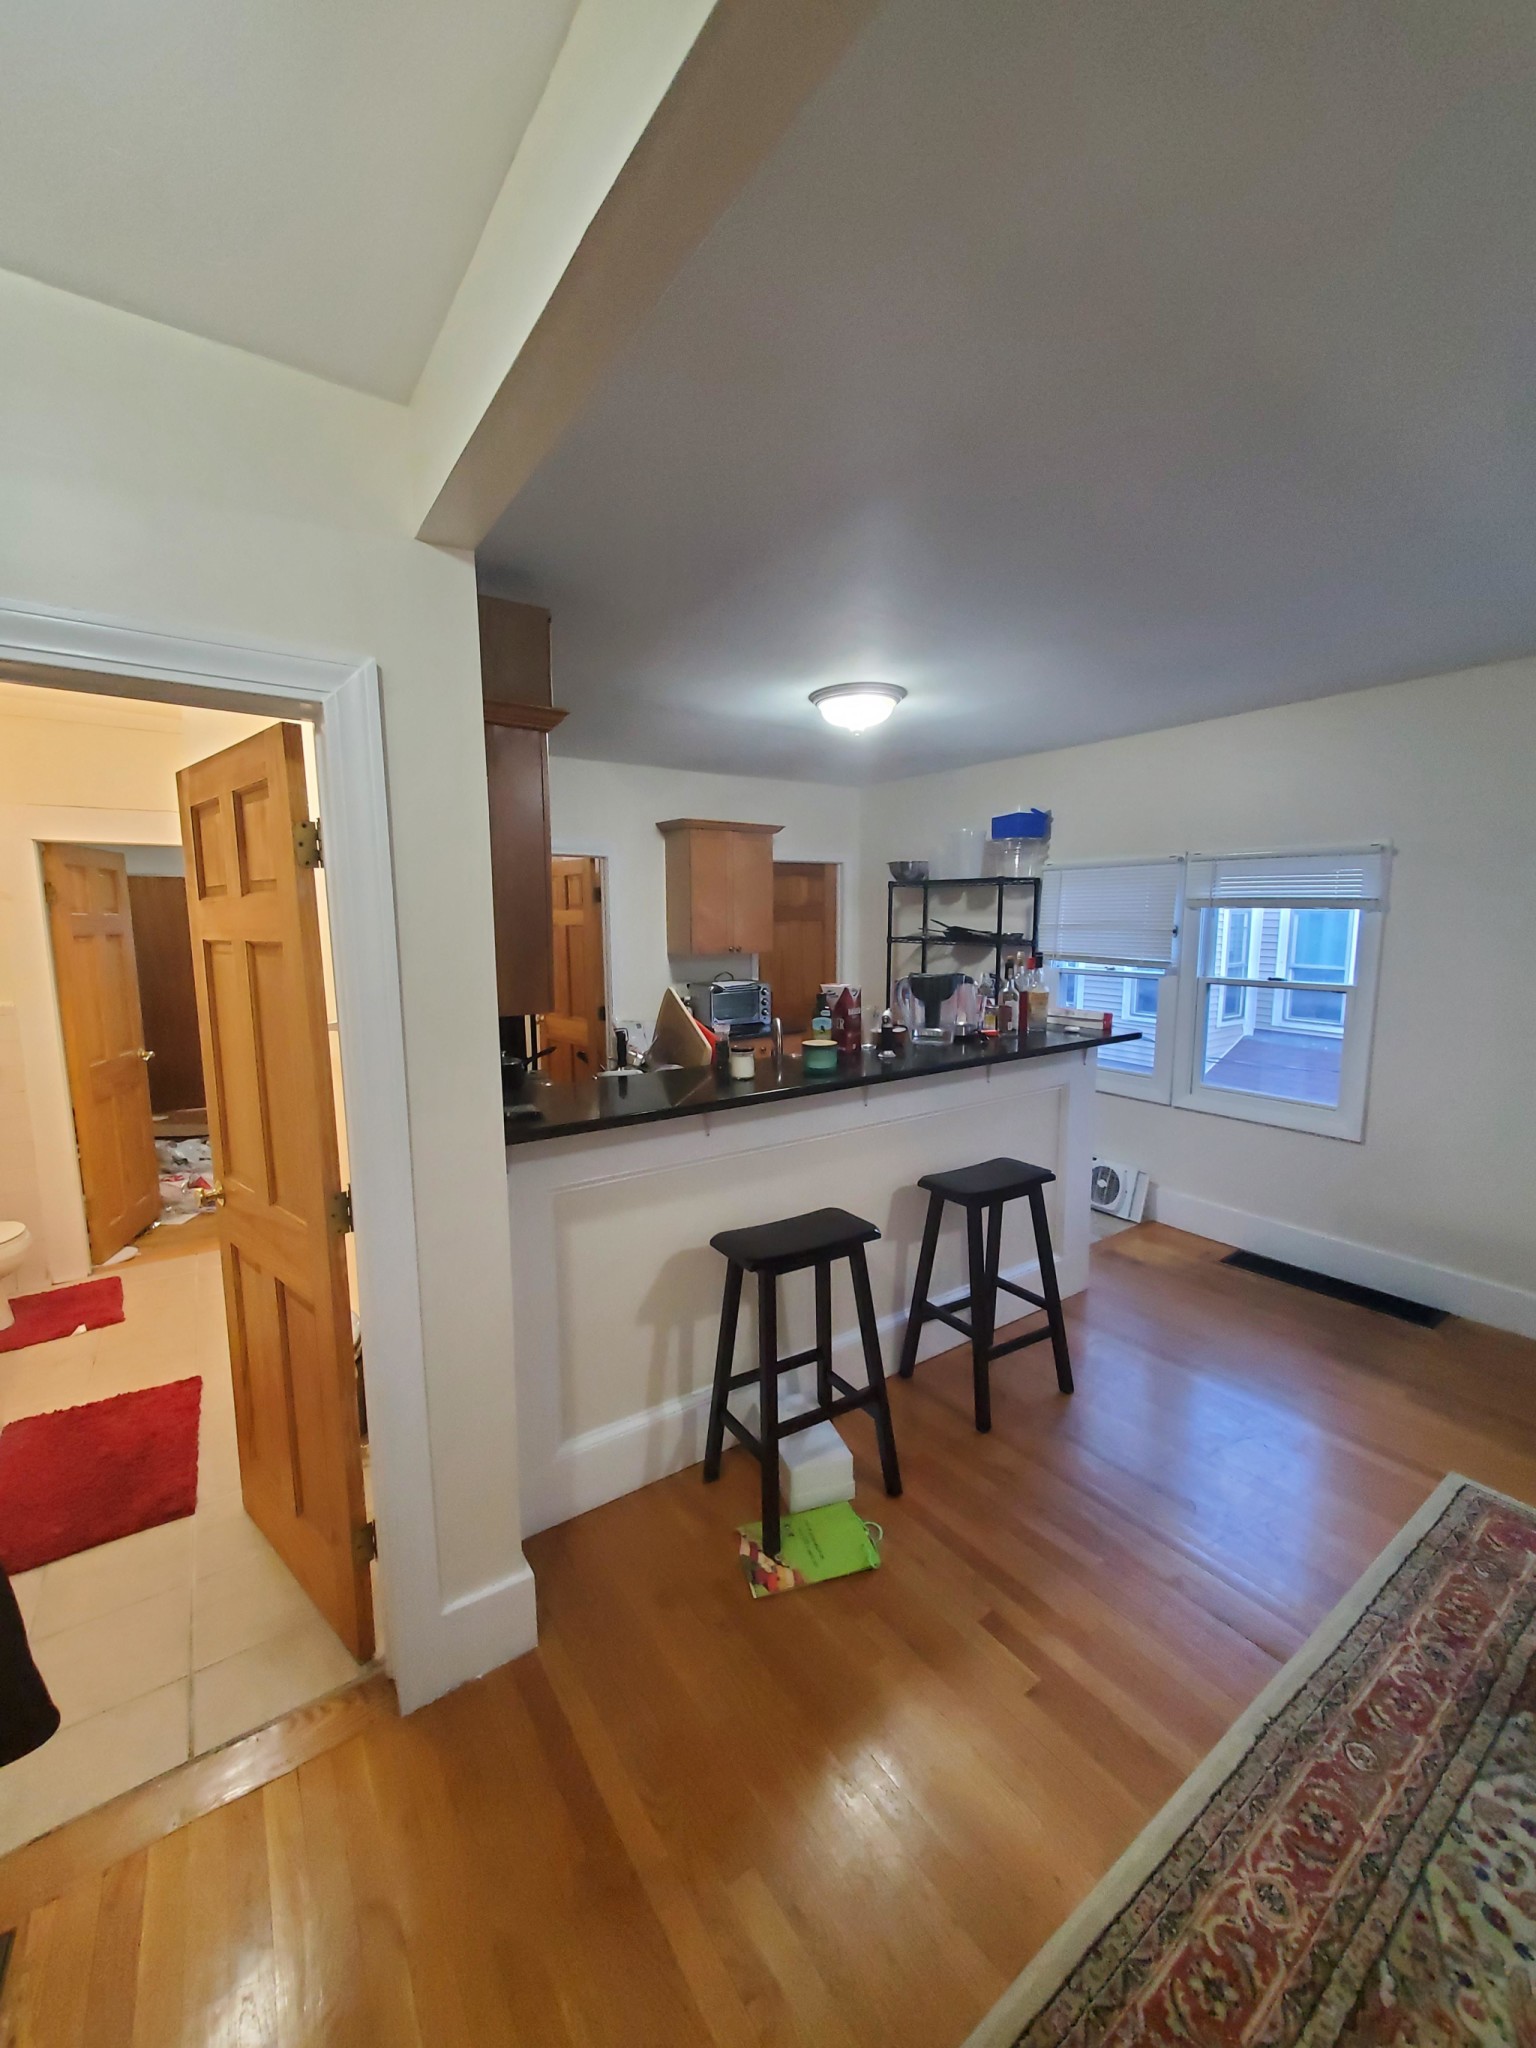 Photos of apartment on Calvin St.,Cambridge MA 02143